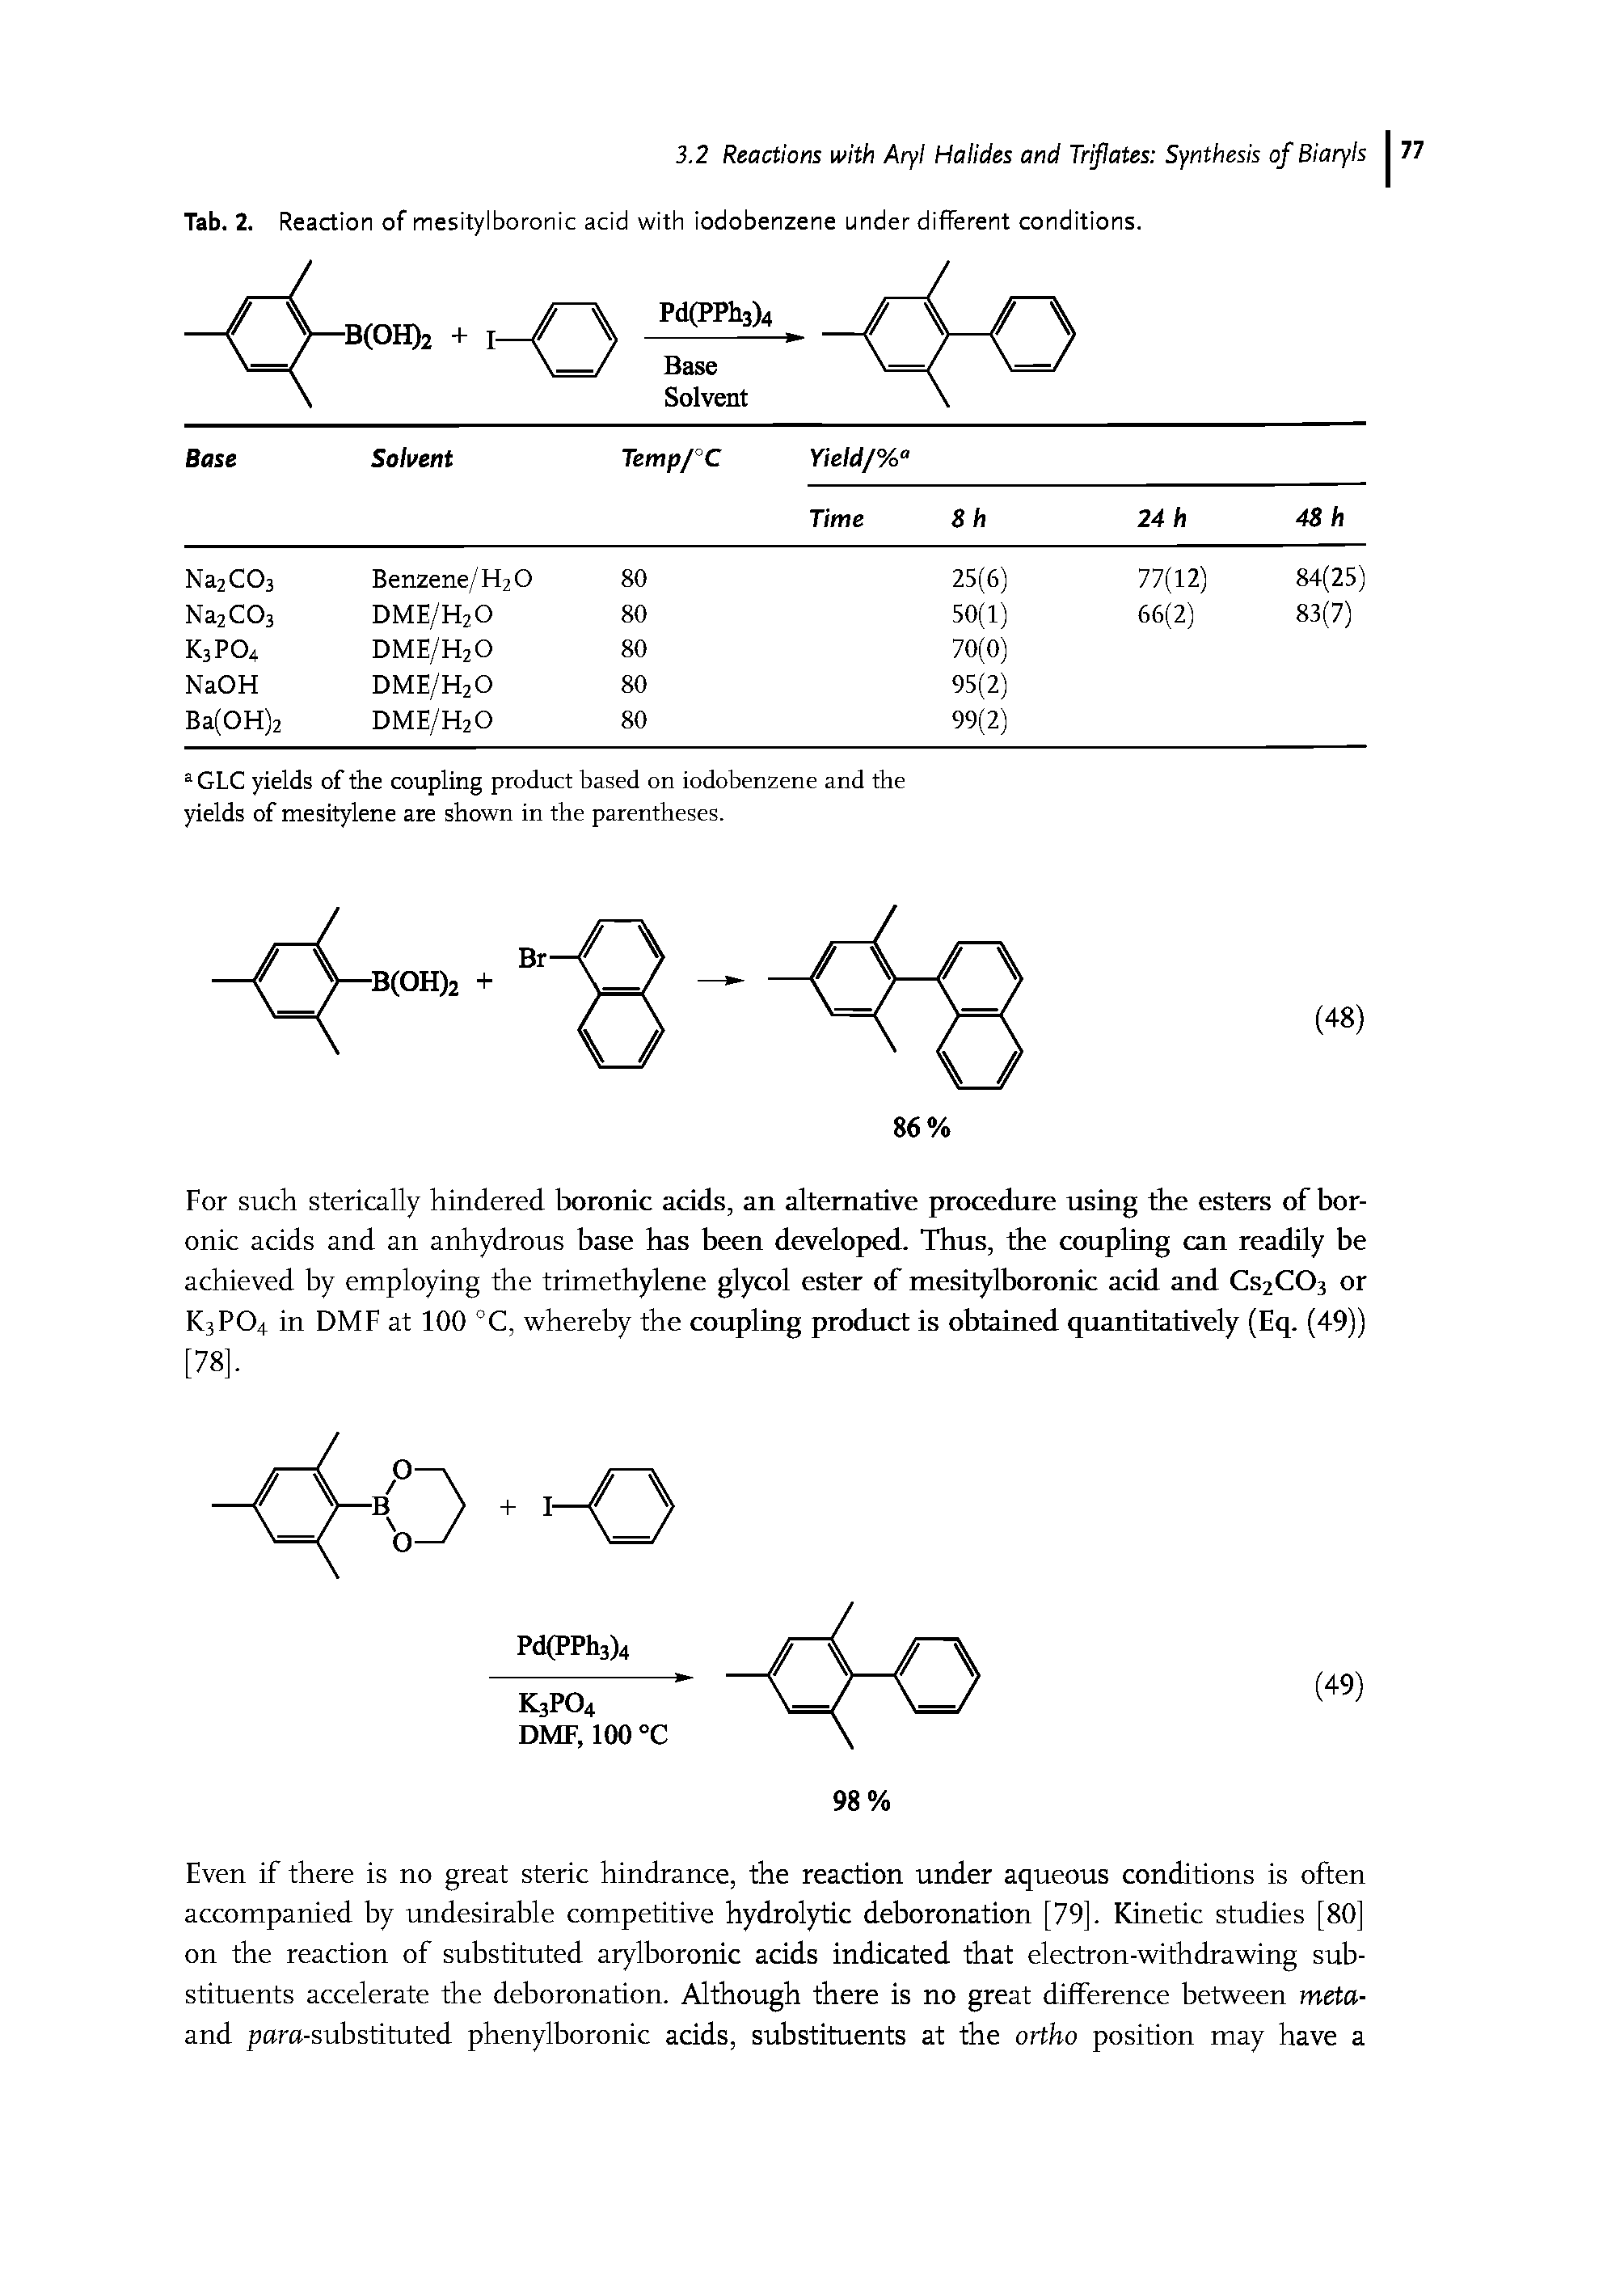 Tab. 2. Reaction of mesitylboronic acid with iodobenzene under different conditions.